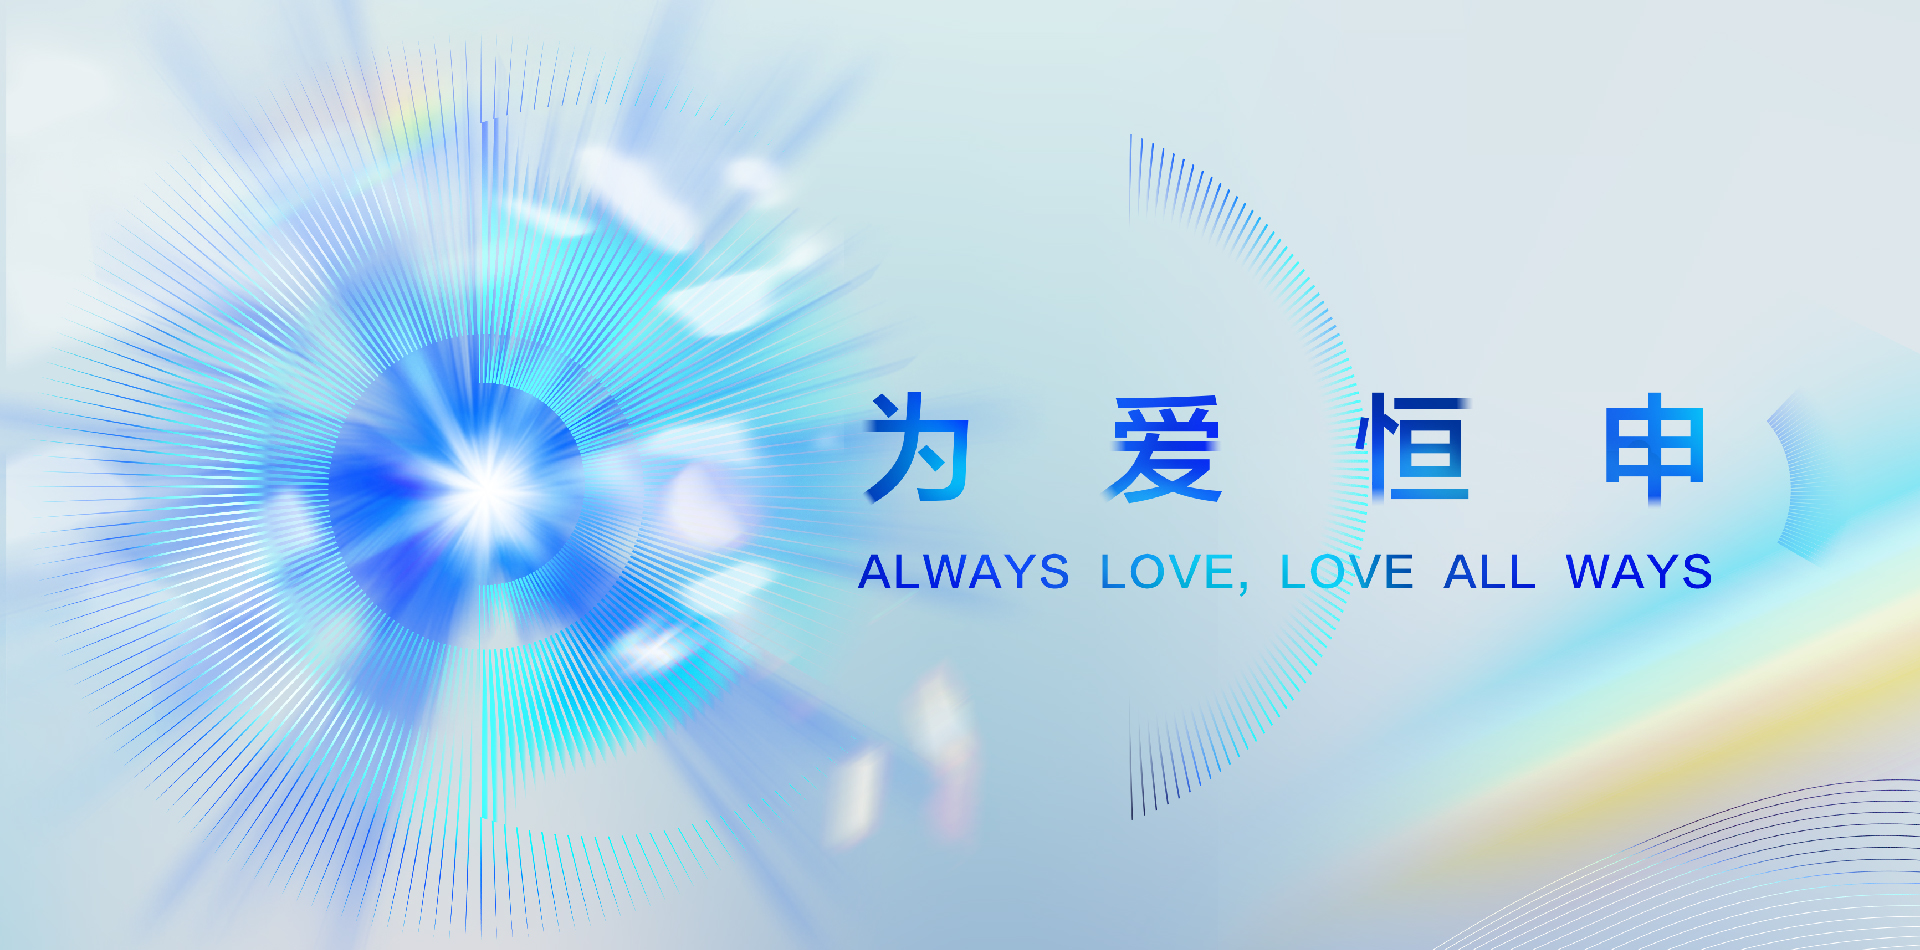 "Always Love, Love All Ways" Celebration, Global Partners Gather Together